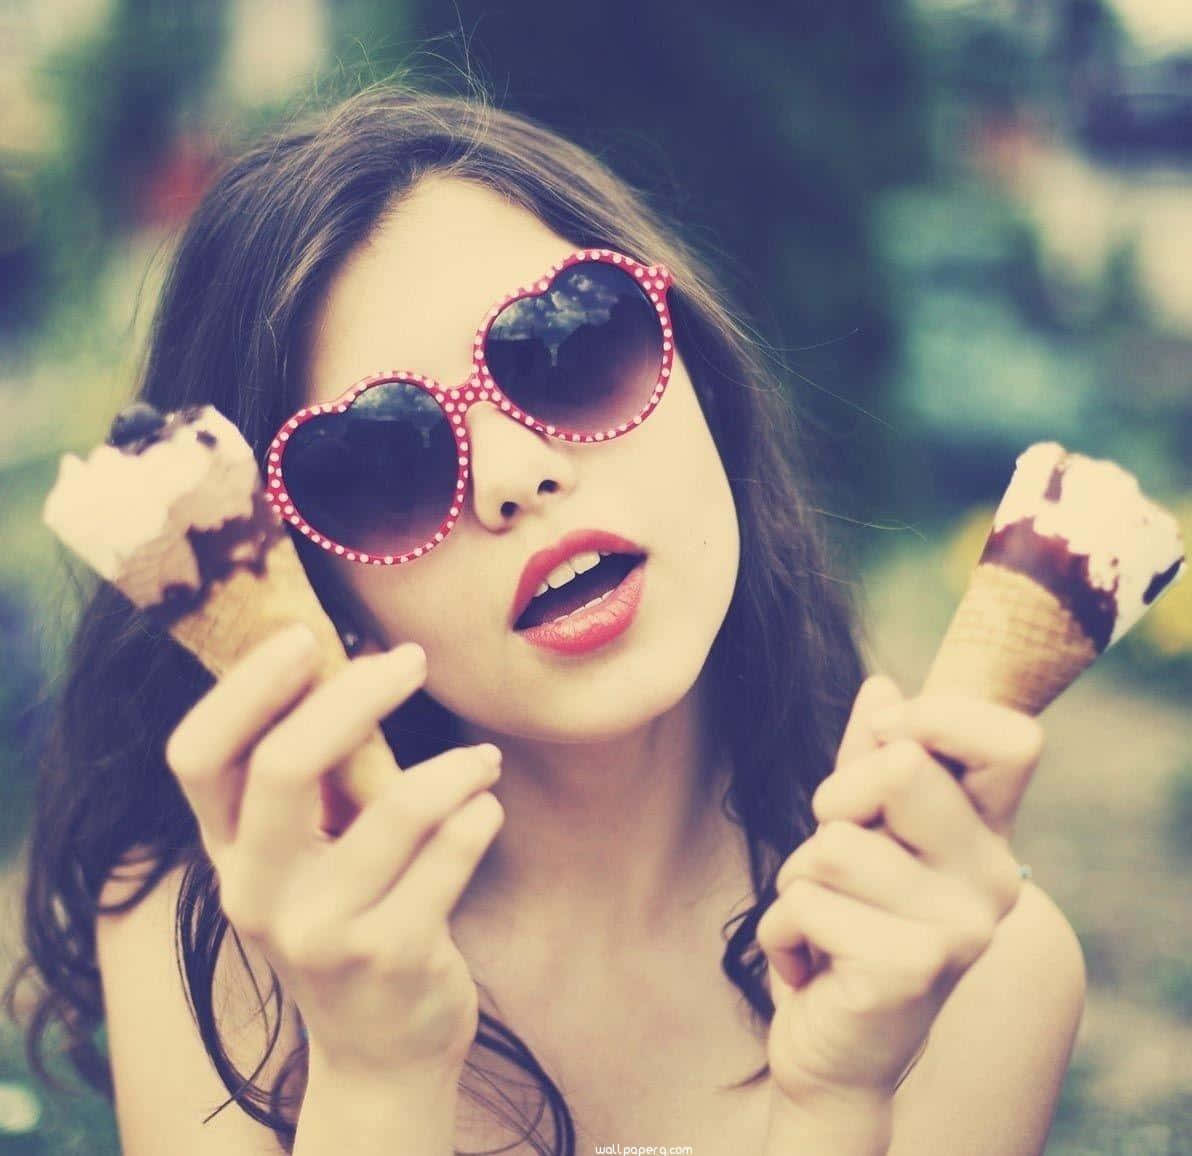 Cool Girl Profile Holding Ice Cream Cones Wallpaper